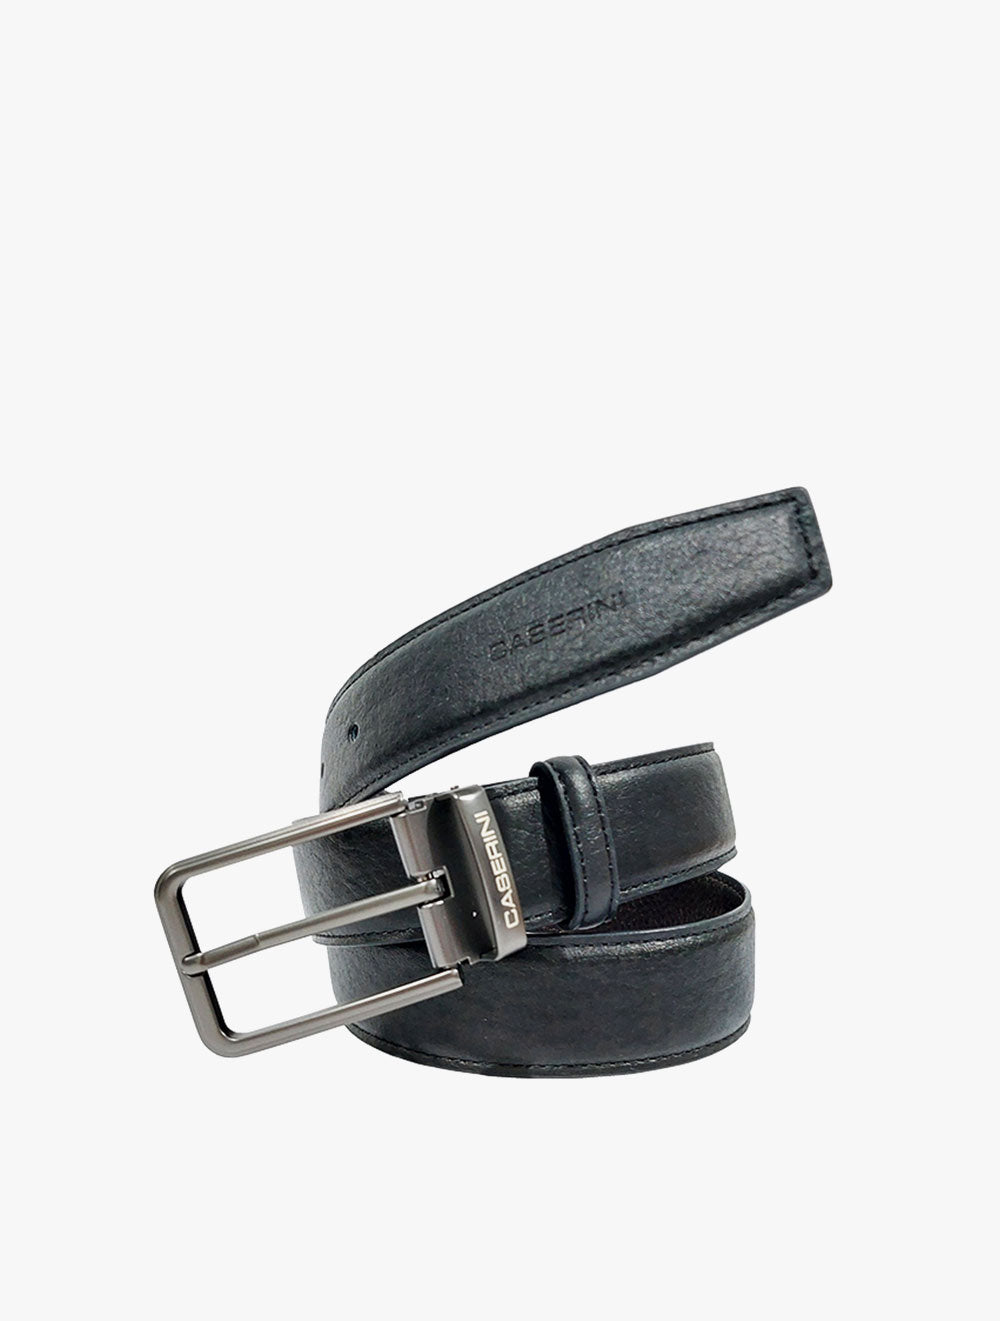 CASERINI
Pin Belt - CS212389-12